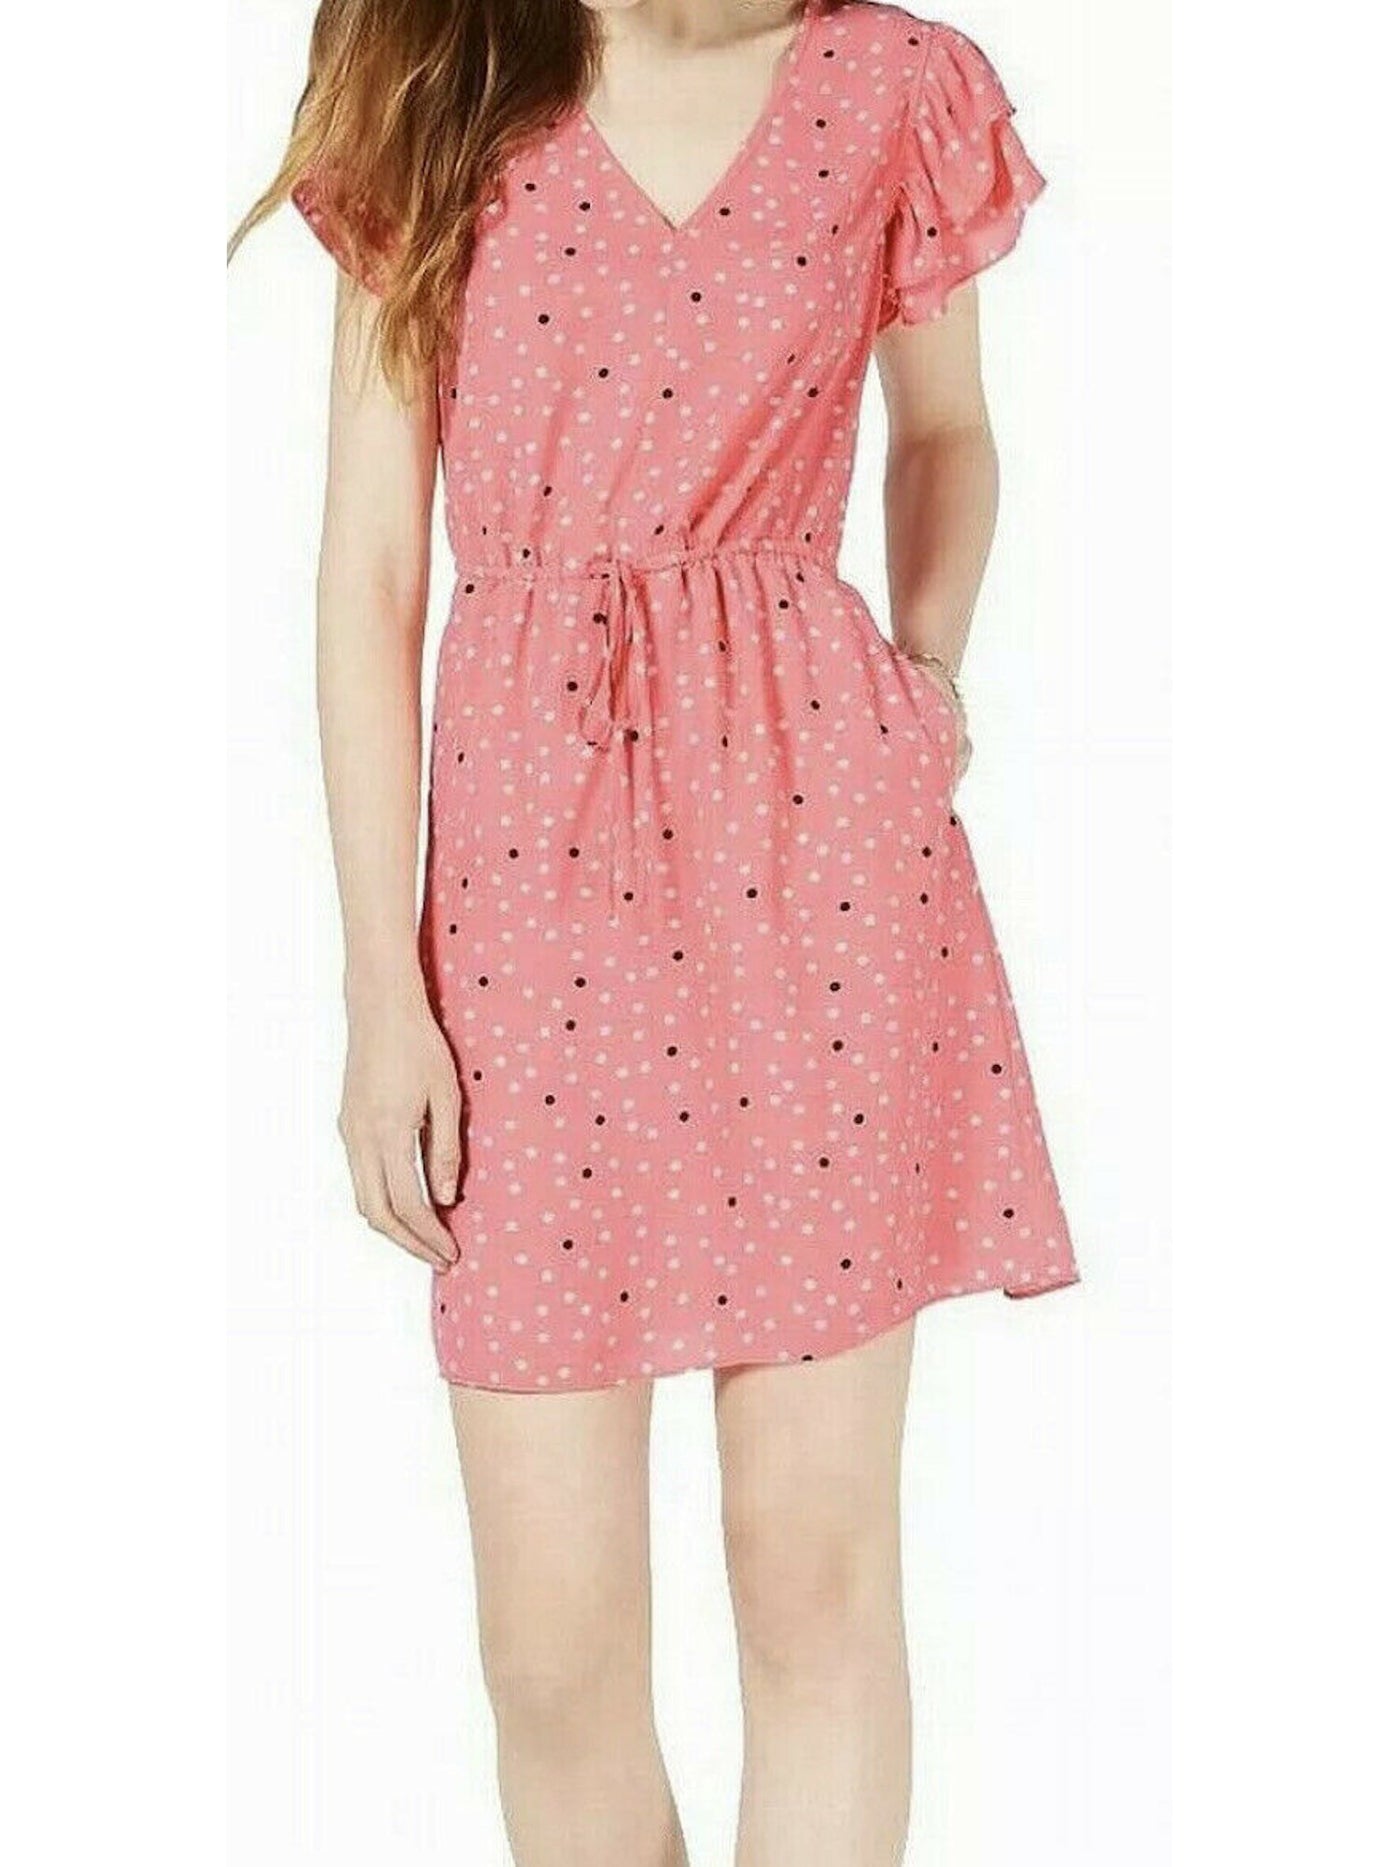 MAISON JULES Womens Pink Polka Dot Short Sleeve Mini Sheath Dress Size: S